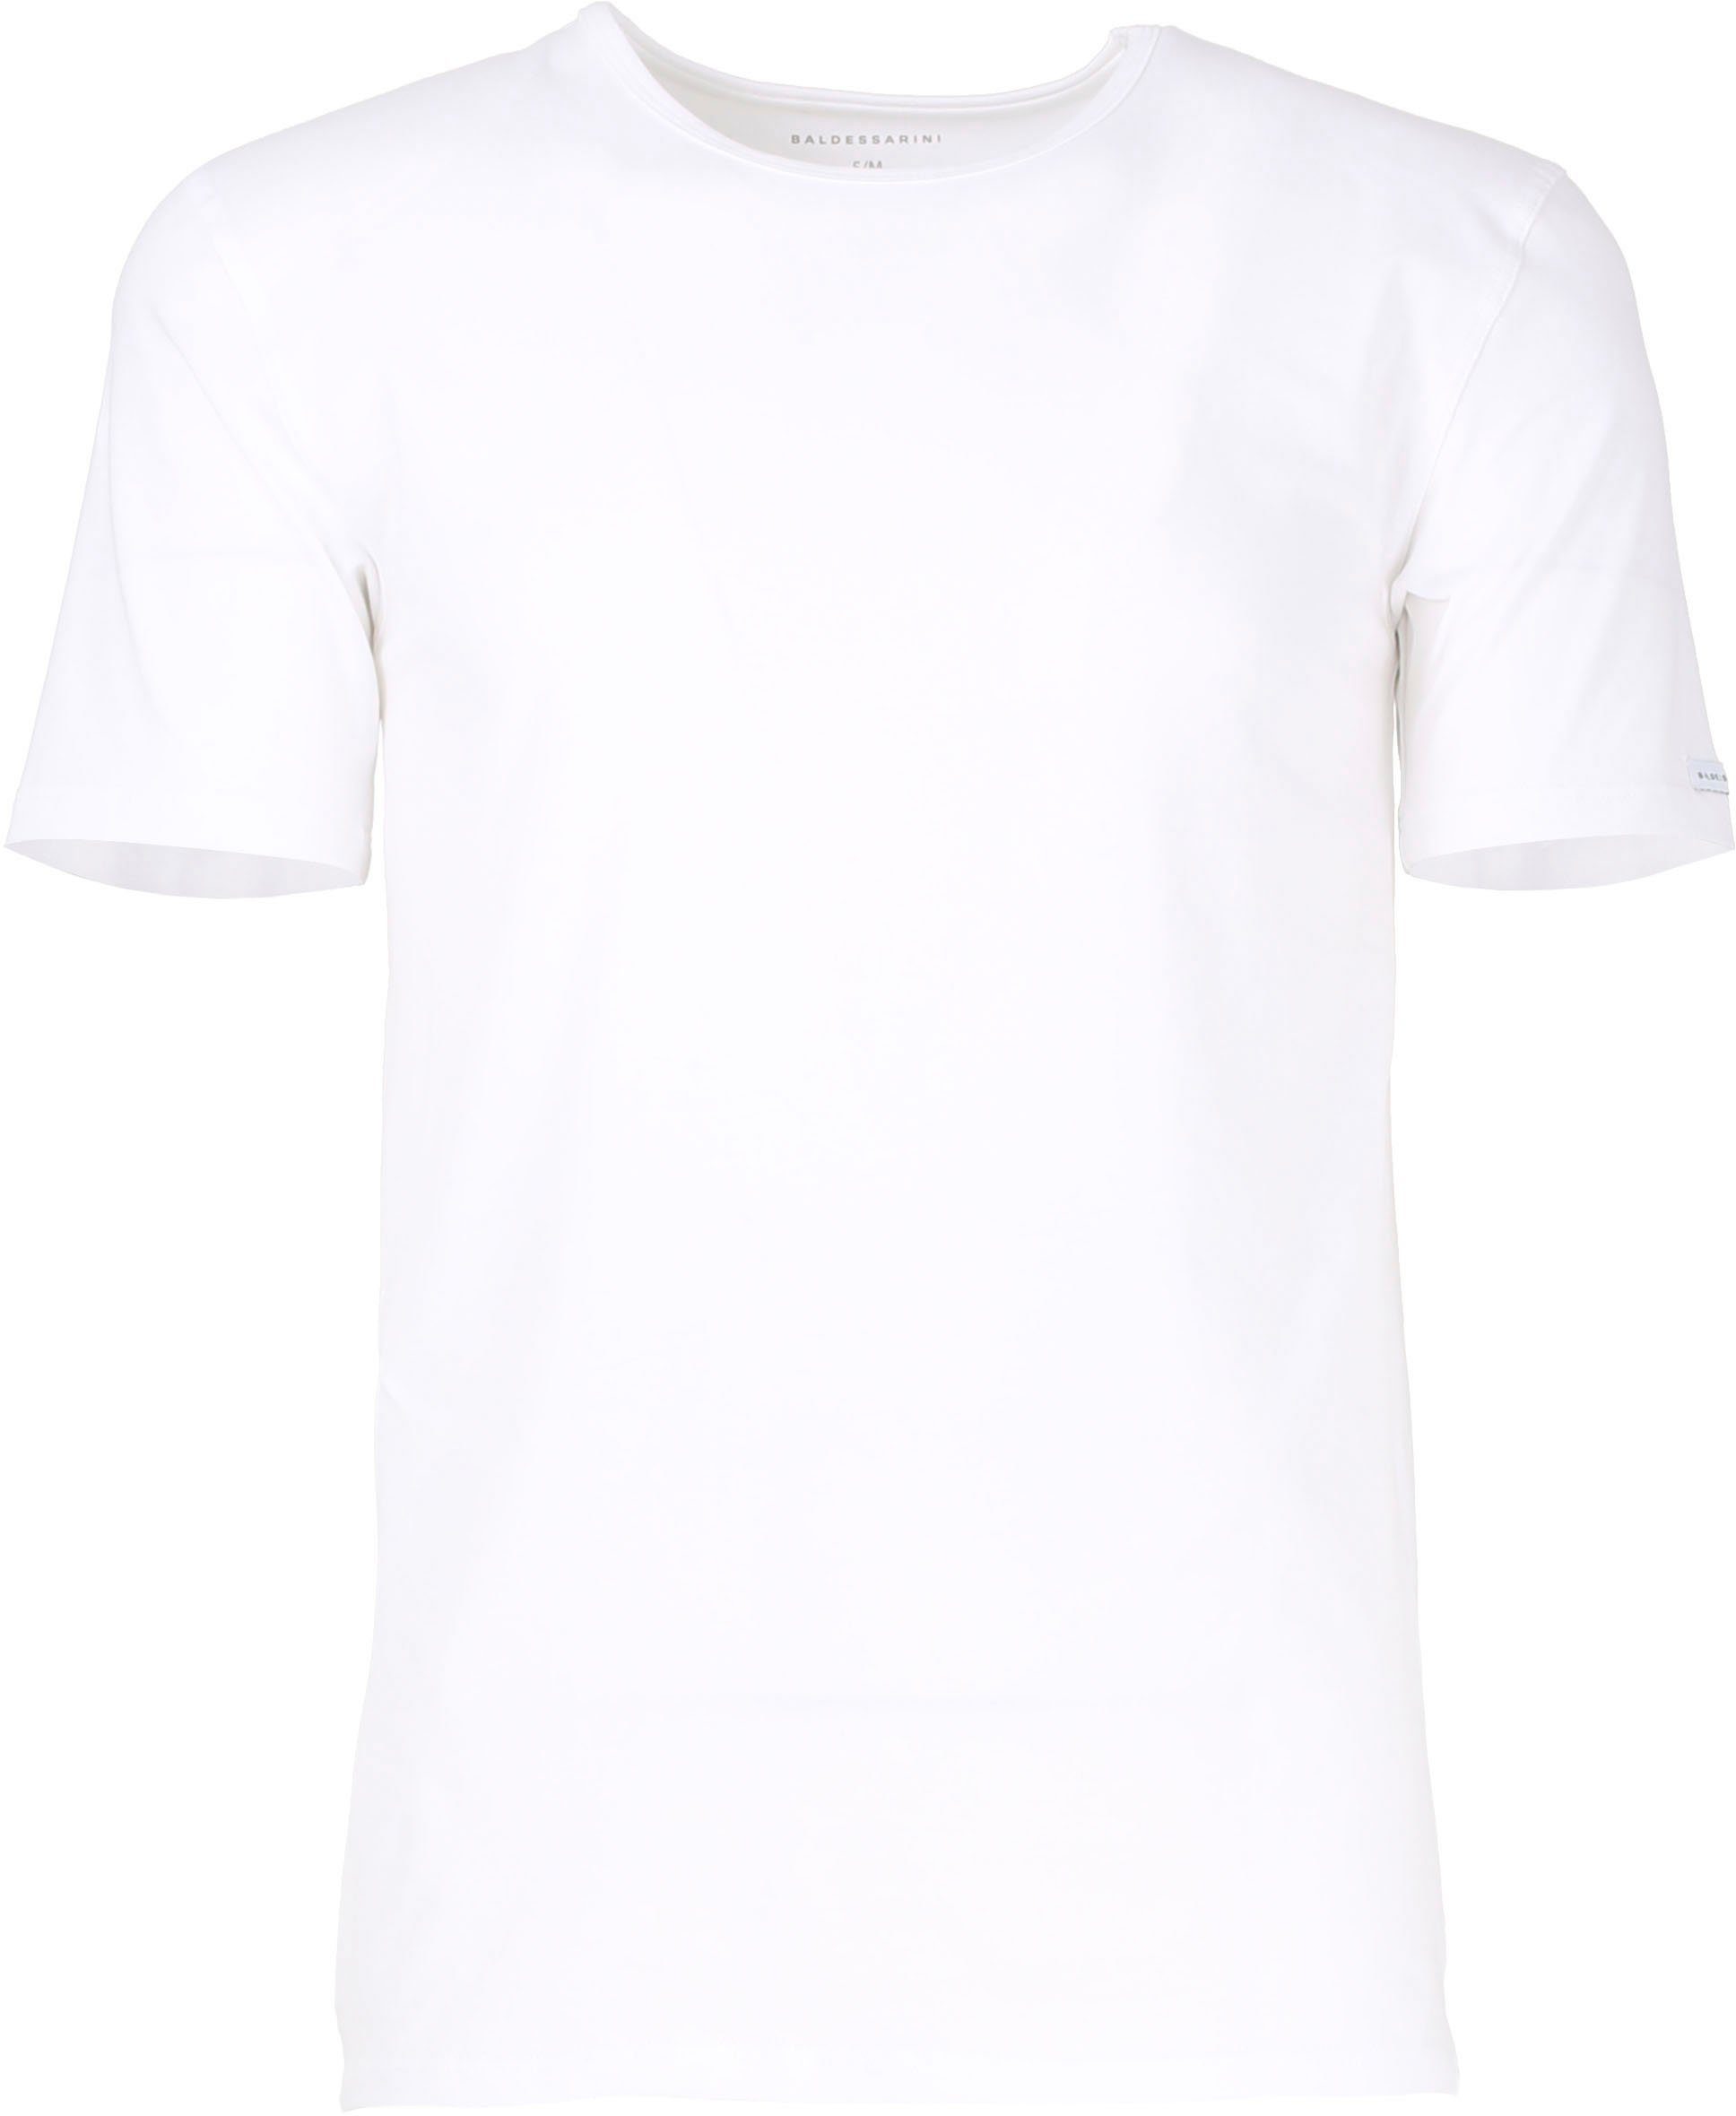 BALDESSARINI T-Shirt Shirt, 1/2, Rundhal weiß-hell-uni